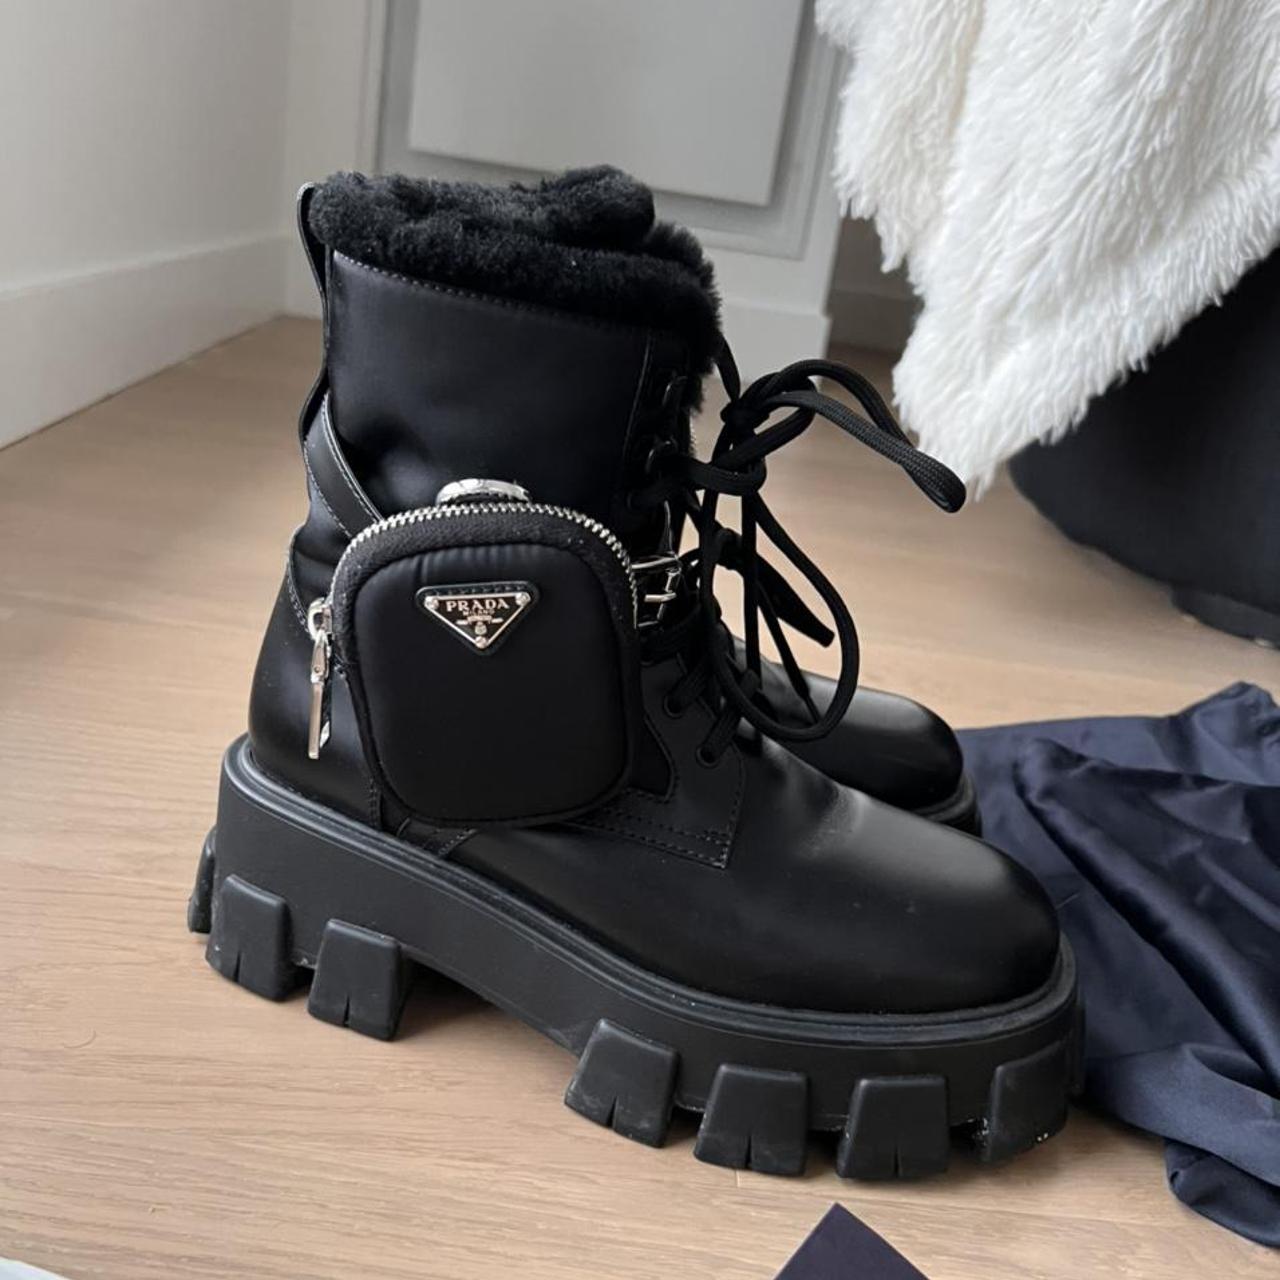 Prada Monolith Boots Black. Size UK 4.5 / Europe... - Depop